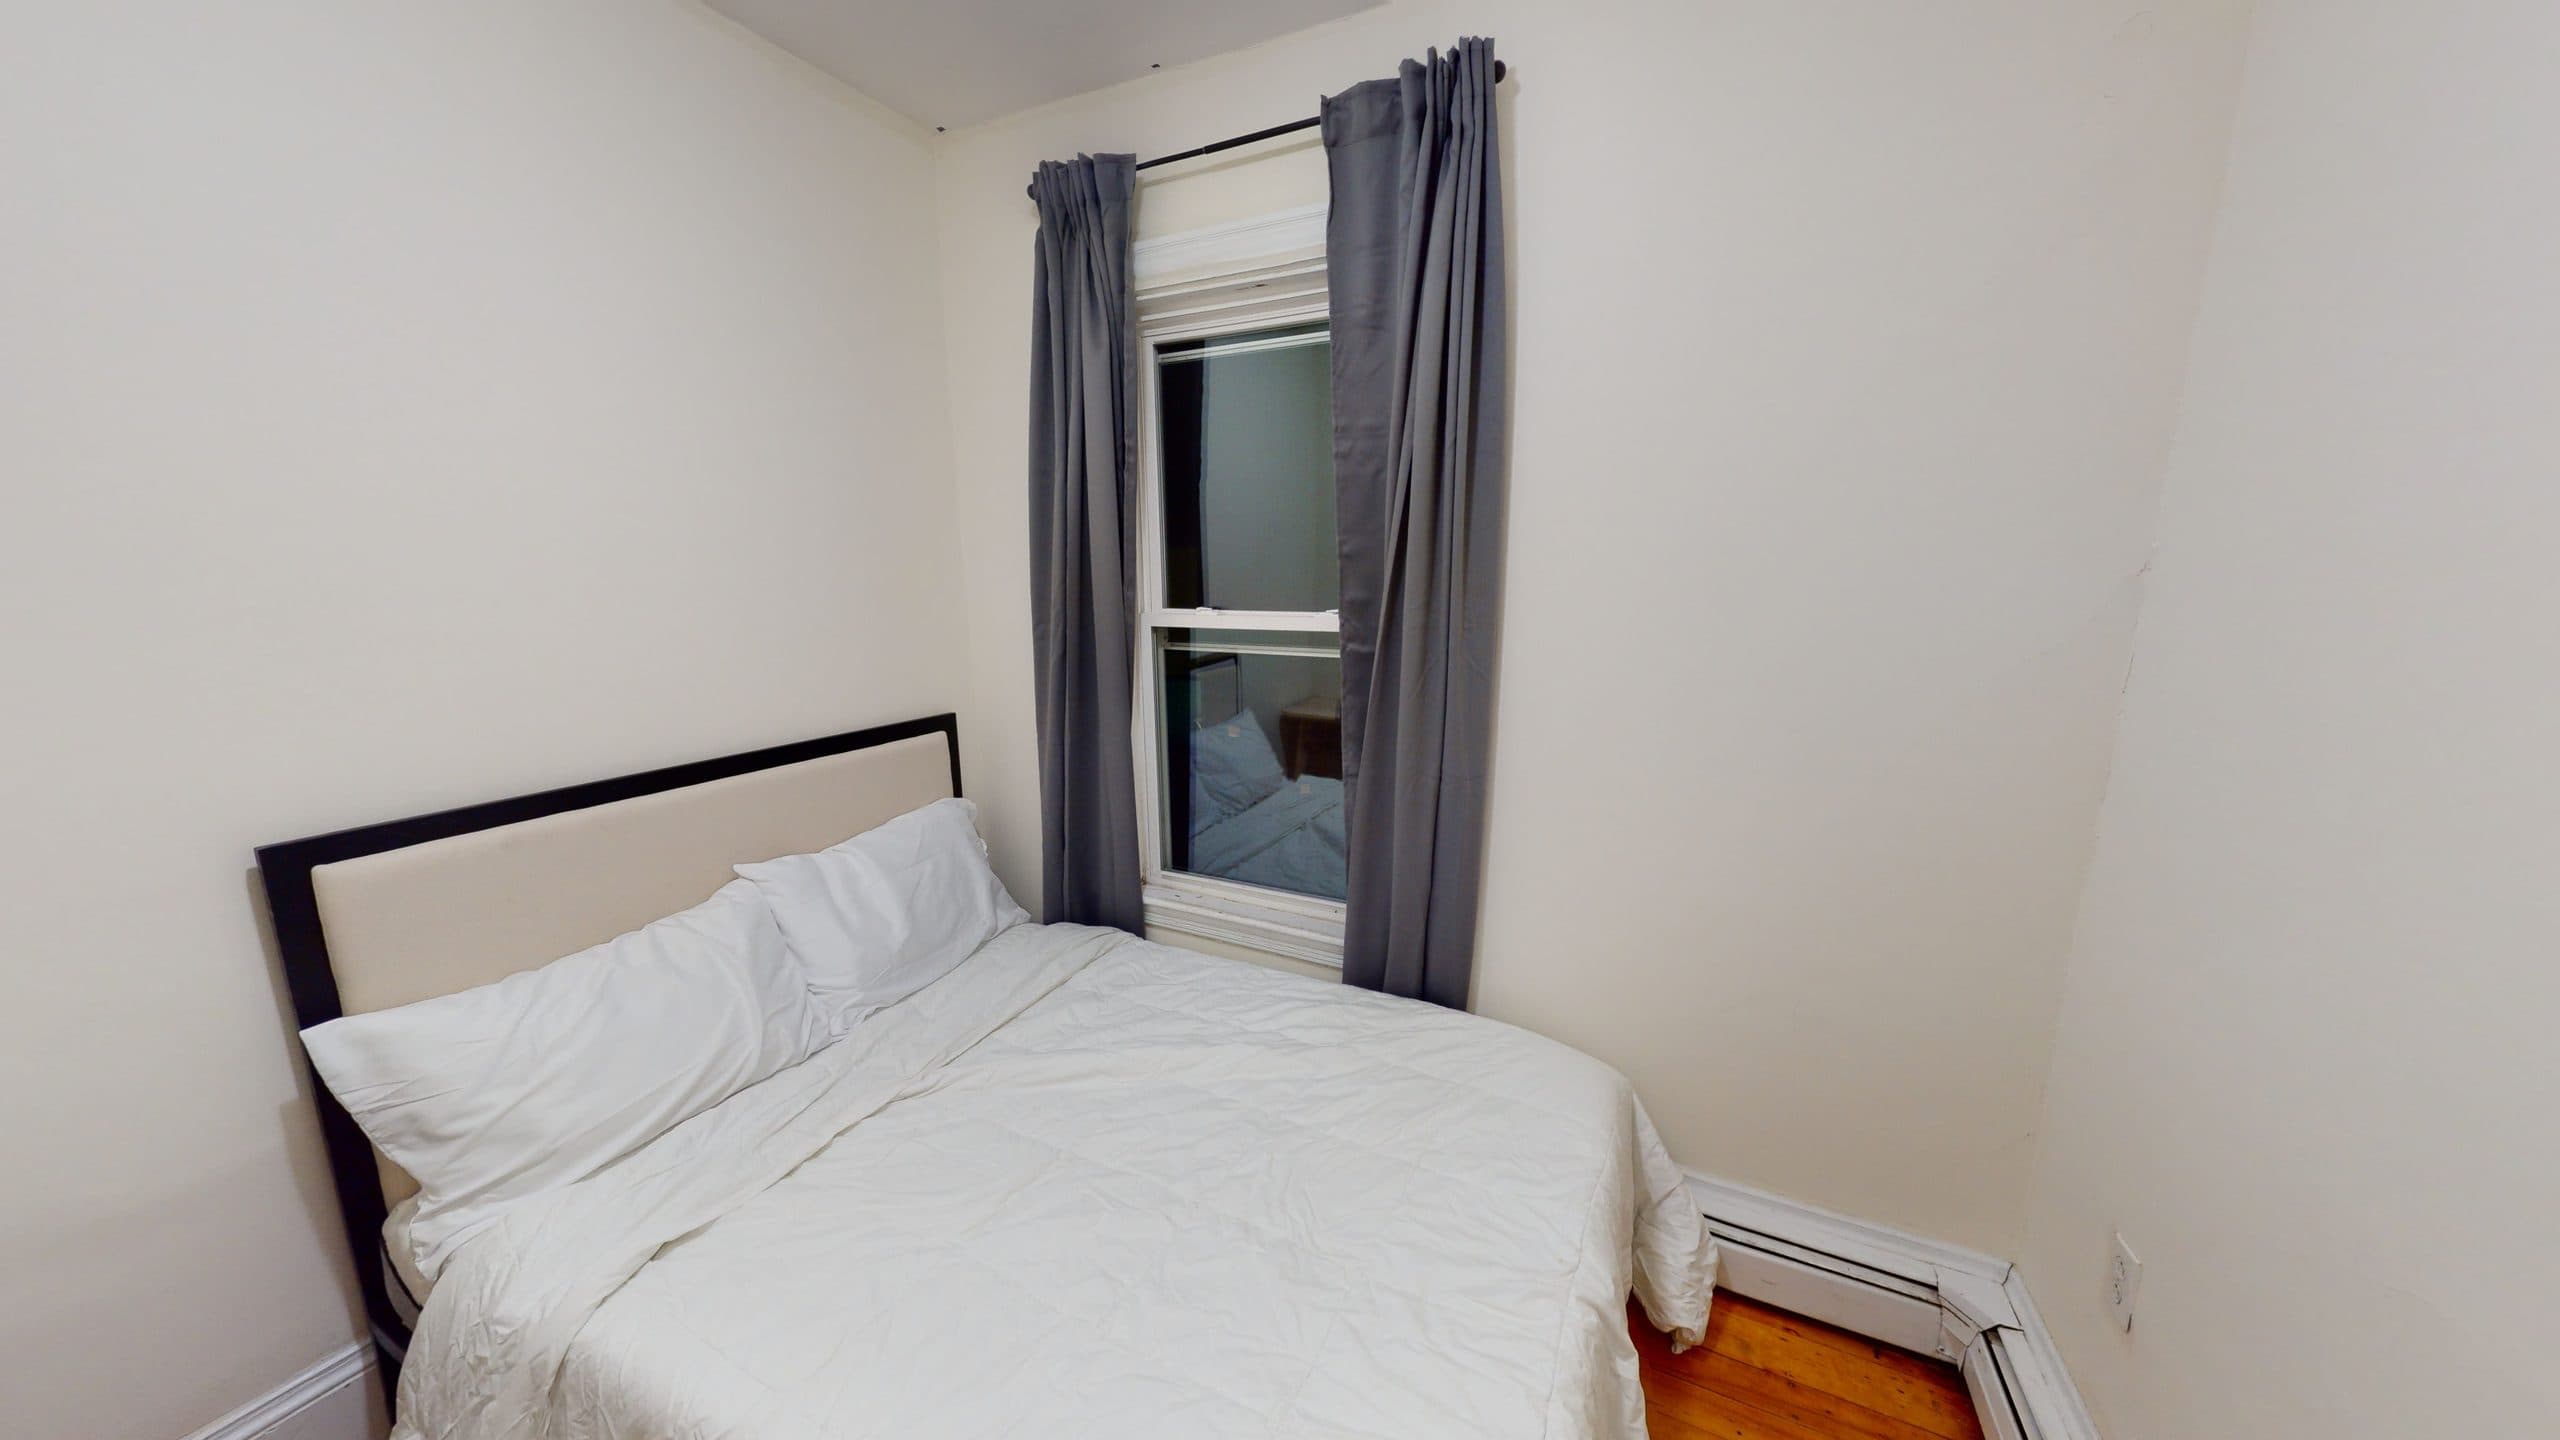 Photo 6 of #3141: Full Bedroom B at June Homes